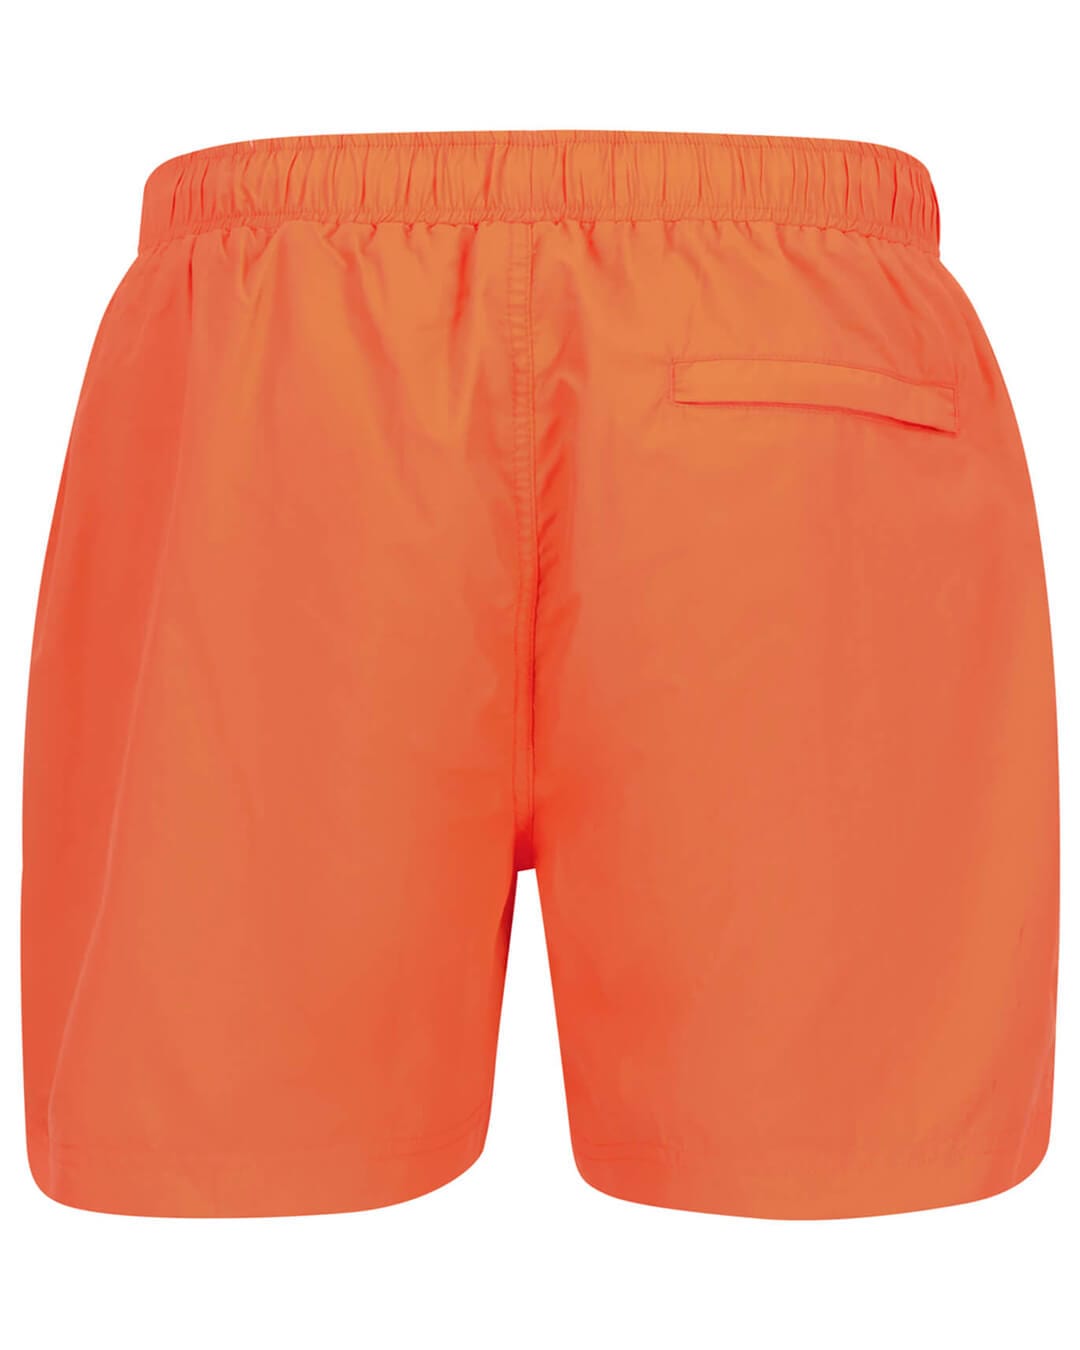 Fynch-Hatton Swimwear Fynch-Hatton Orange Solid Basic Swimshort